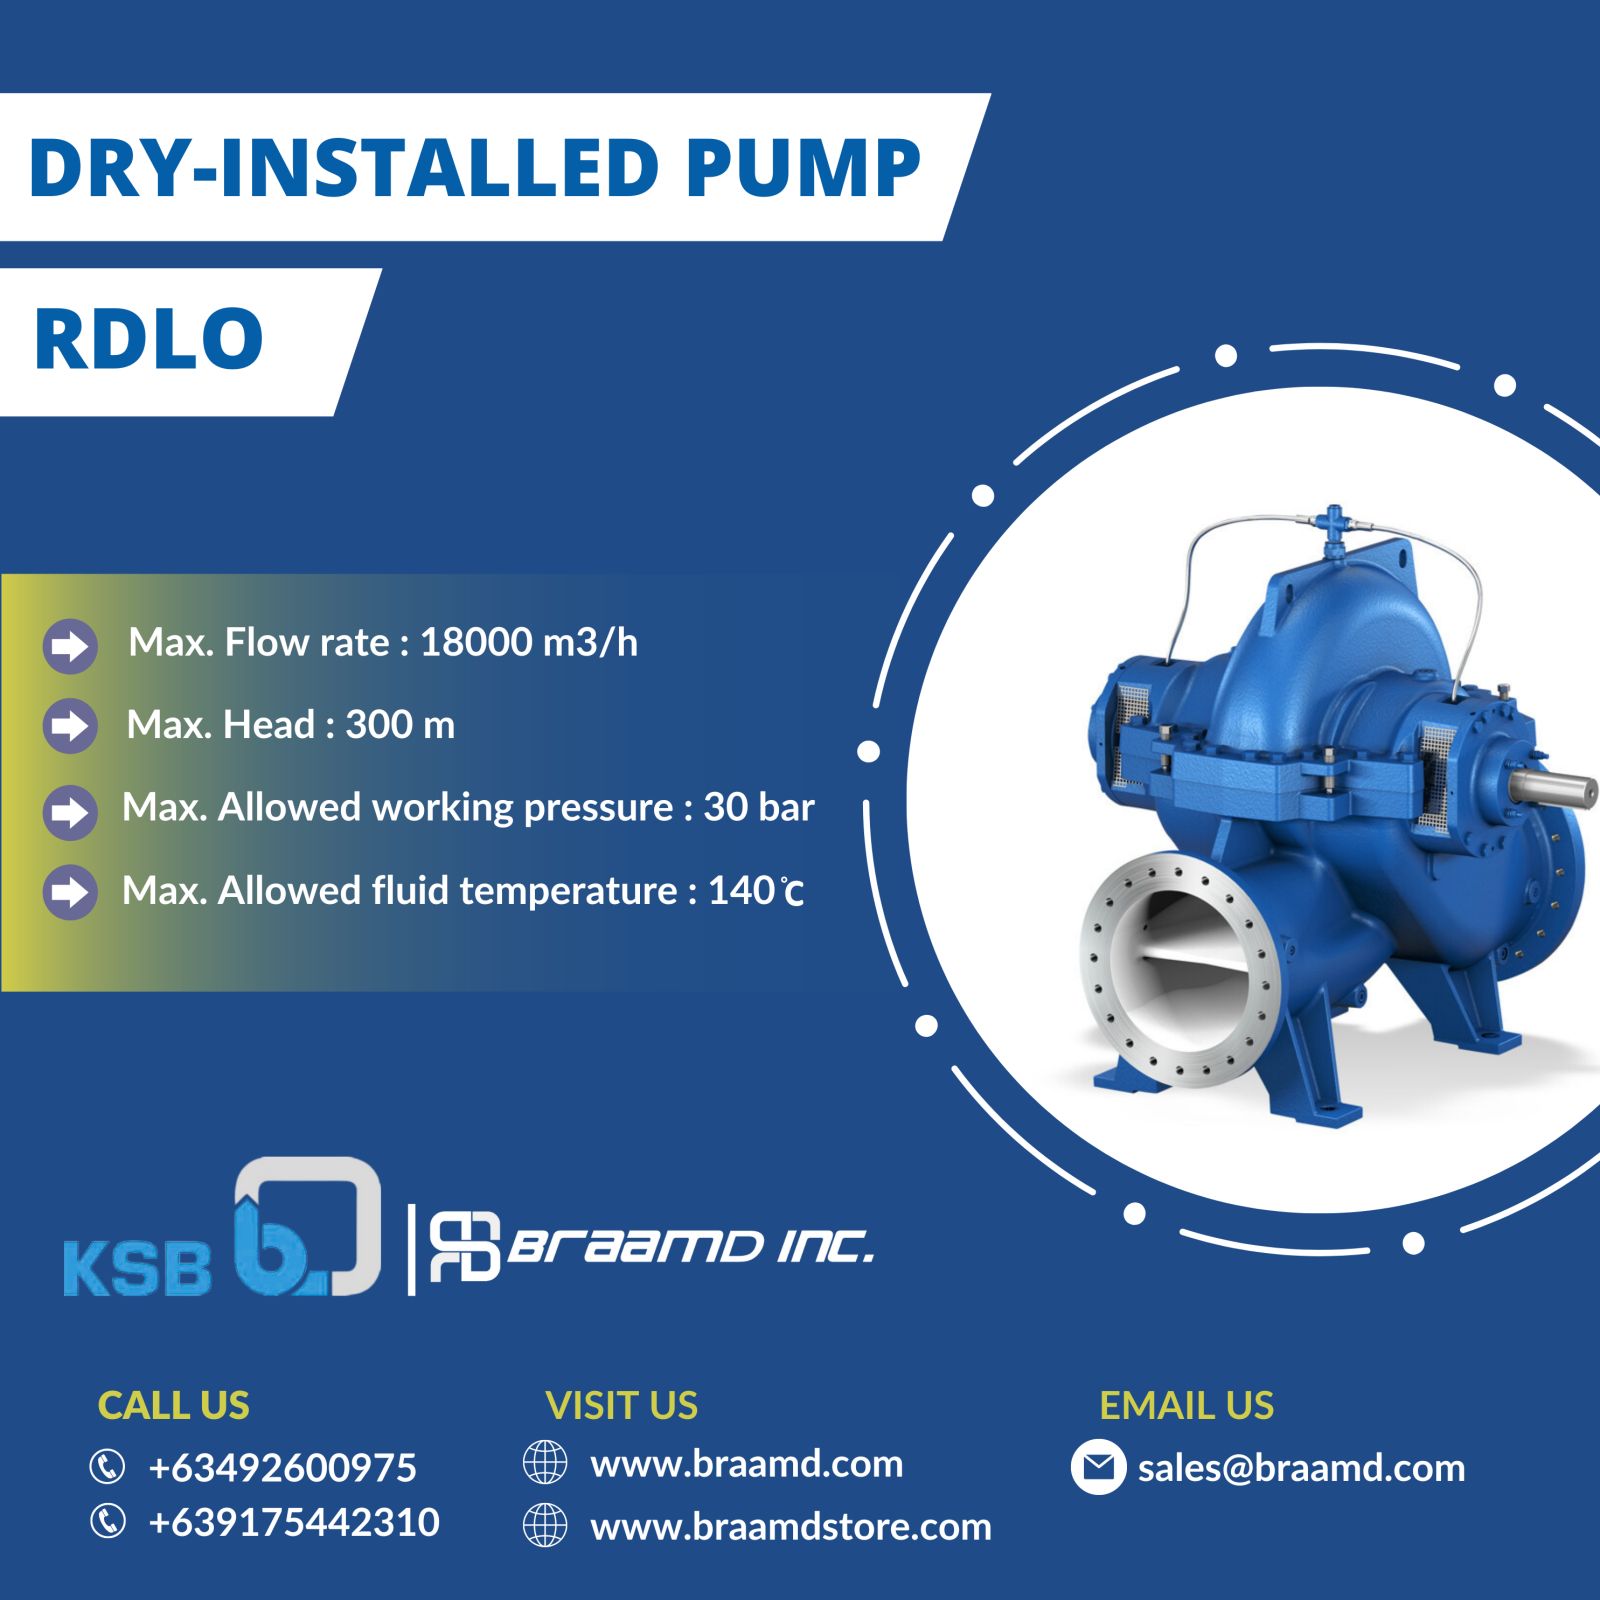 Benefits of KSB RDLO Dry-Installed Pump